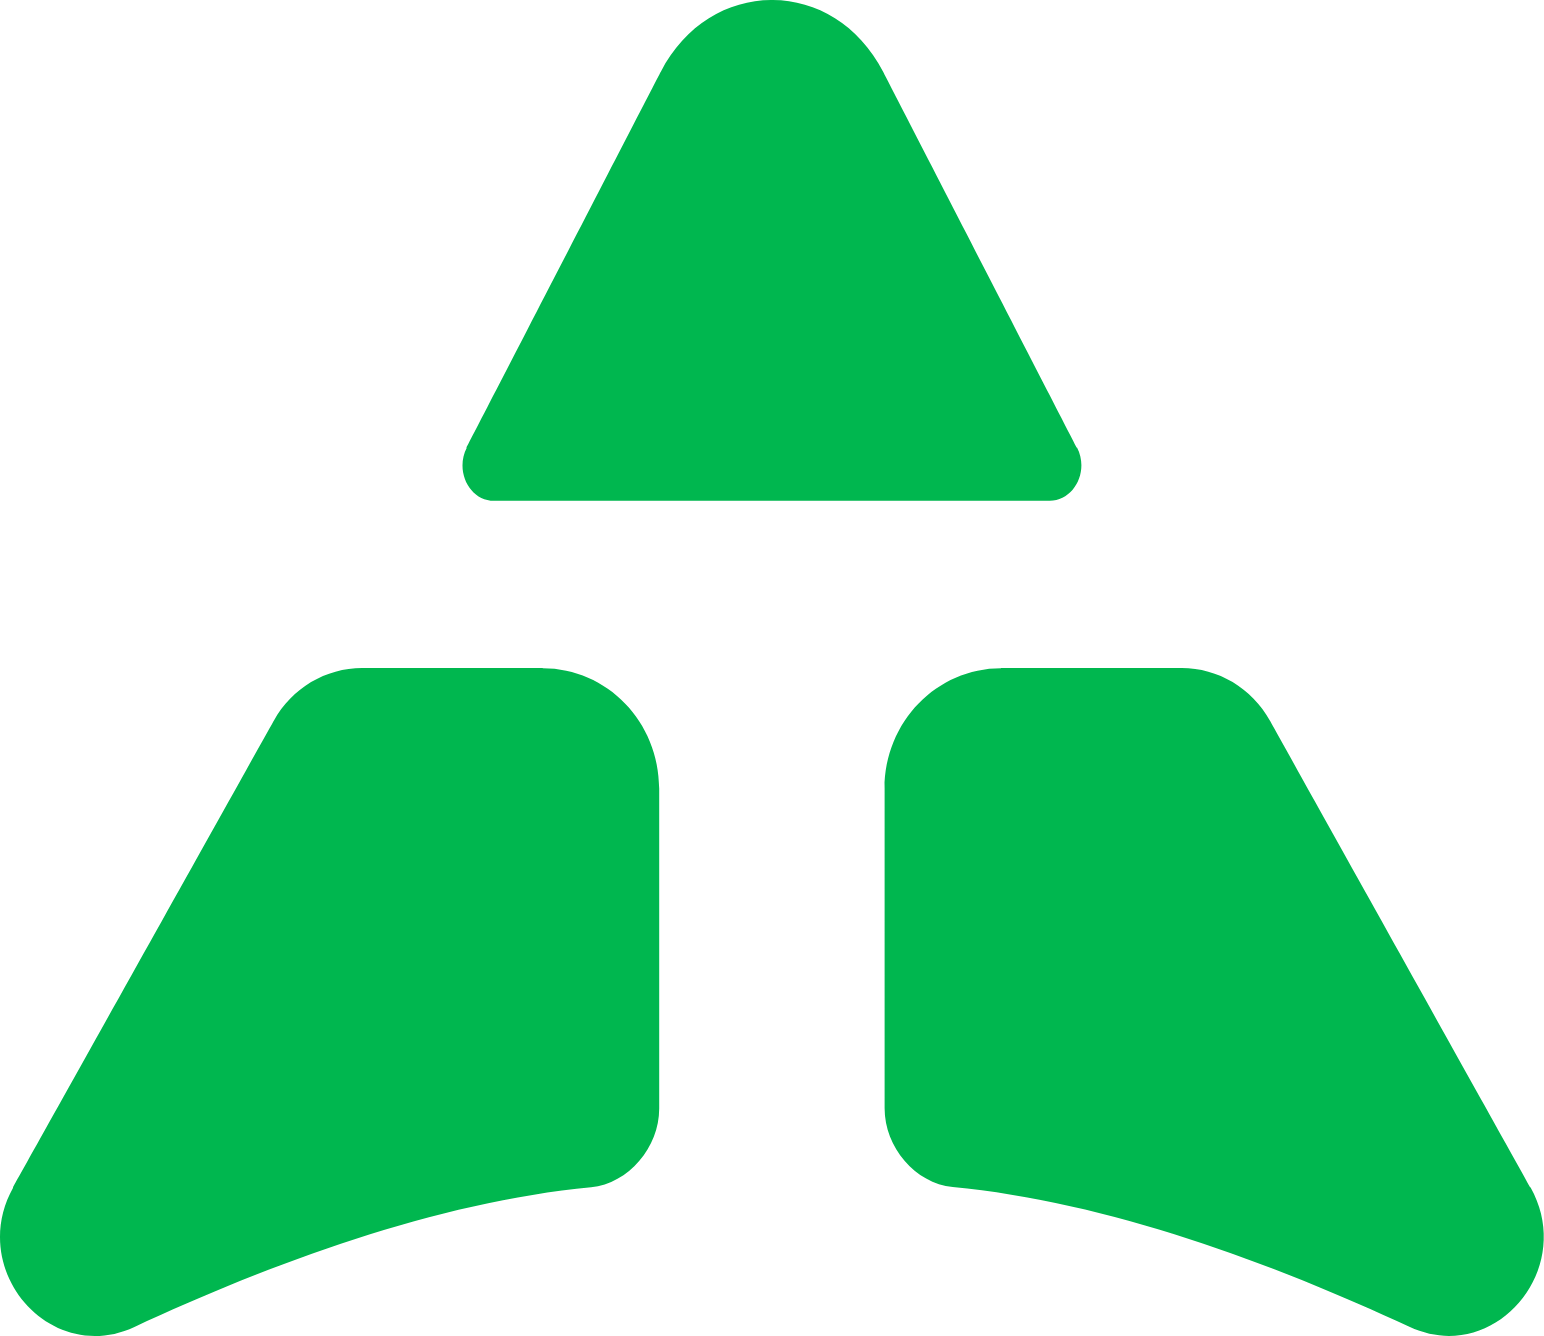 AgileThought logo (transparent PNG)